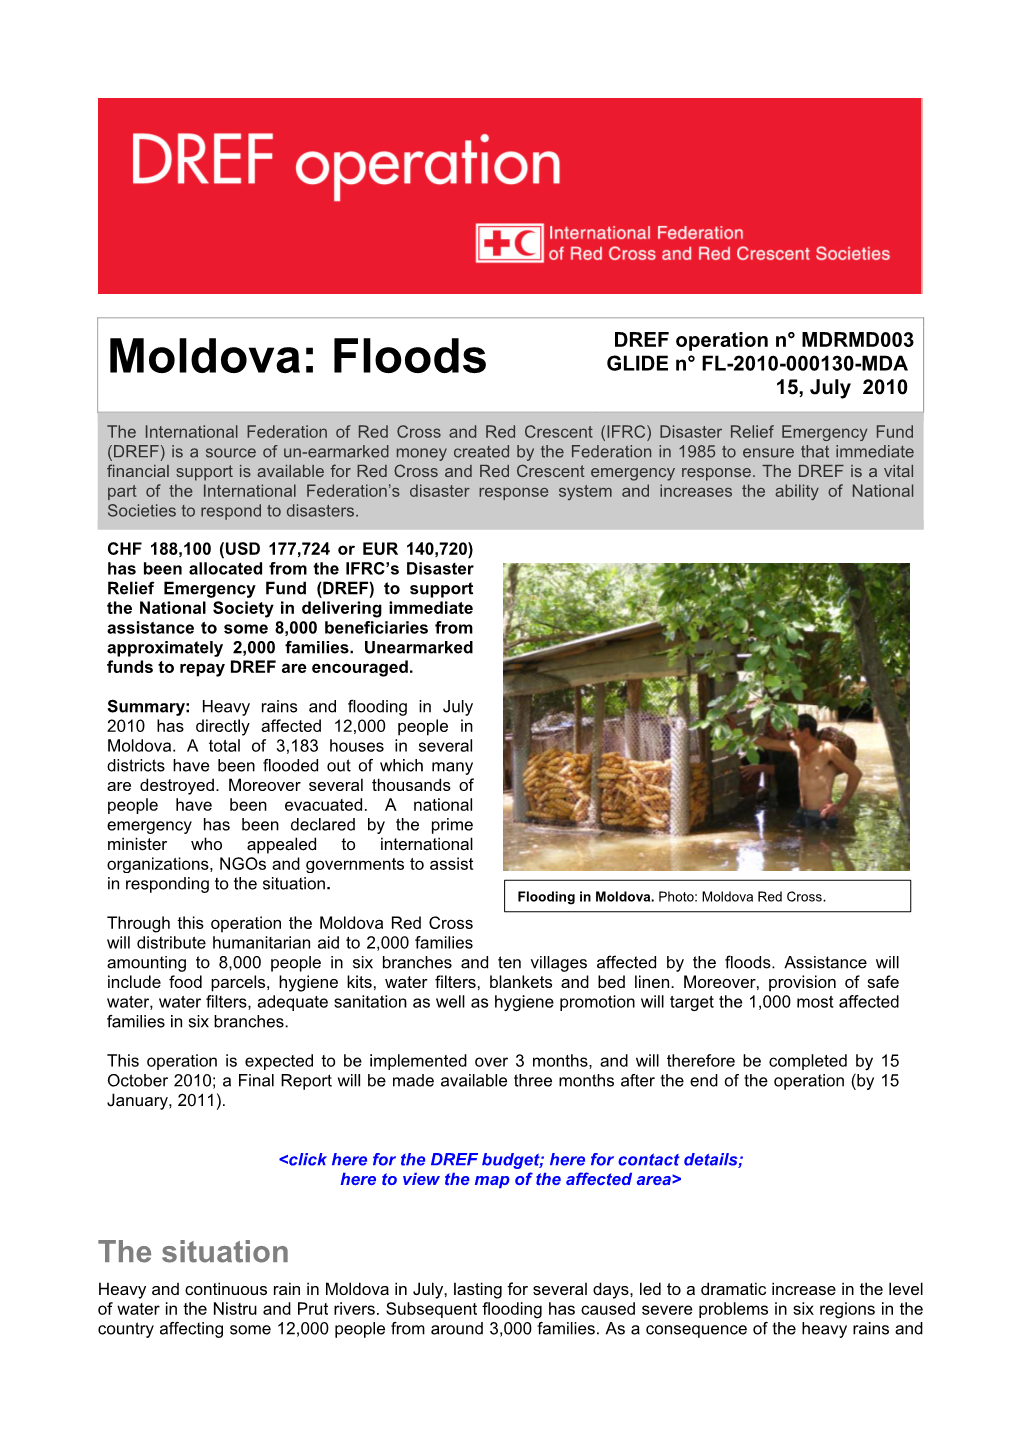 Moldova: Floods GLIDE N° FL-2010-000130-MDA 15, July 2010